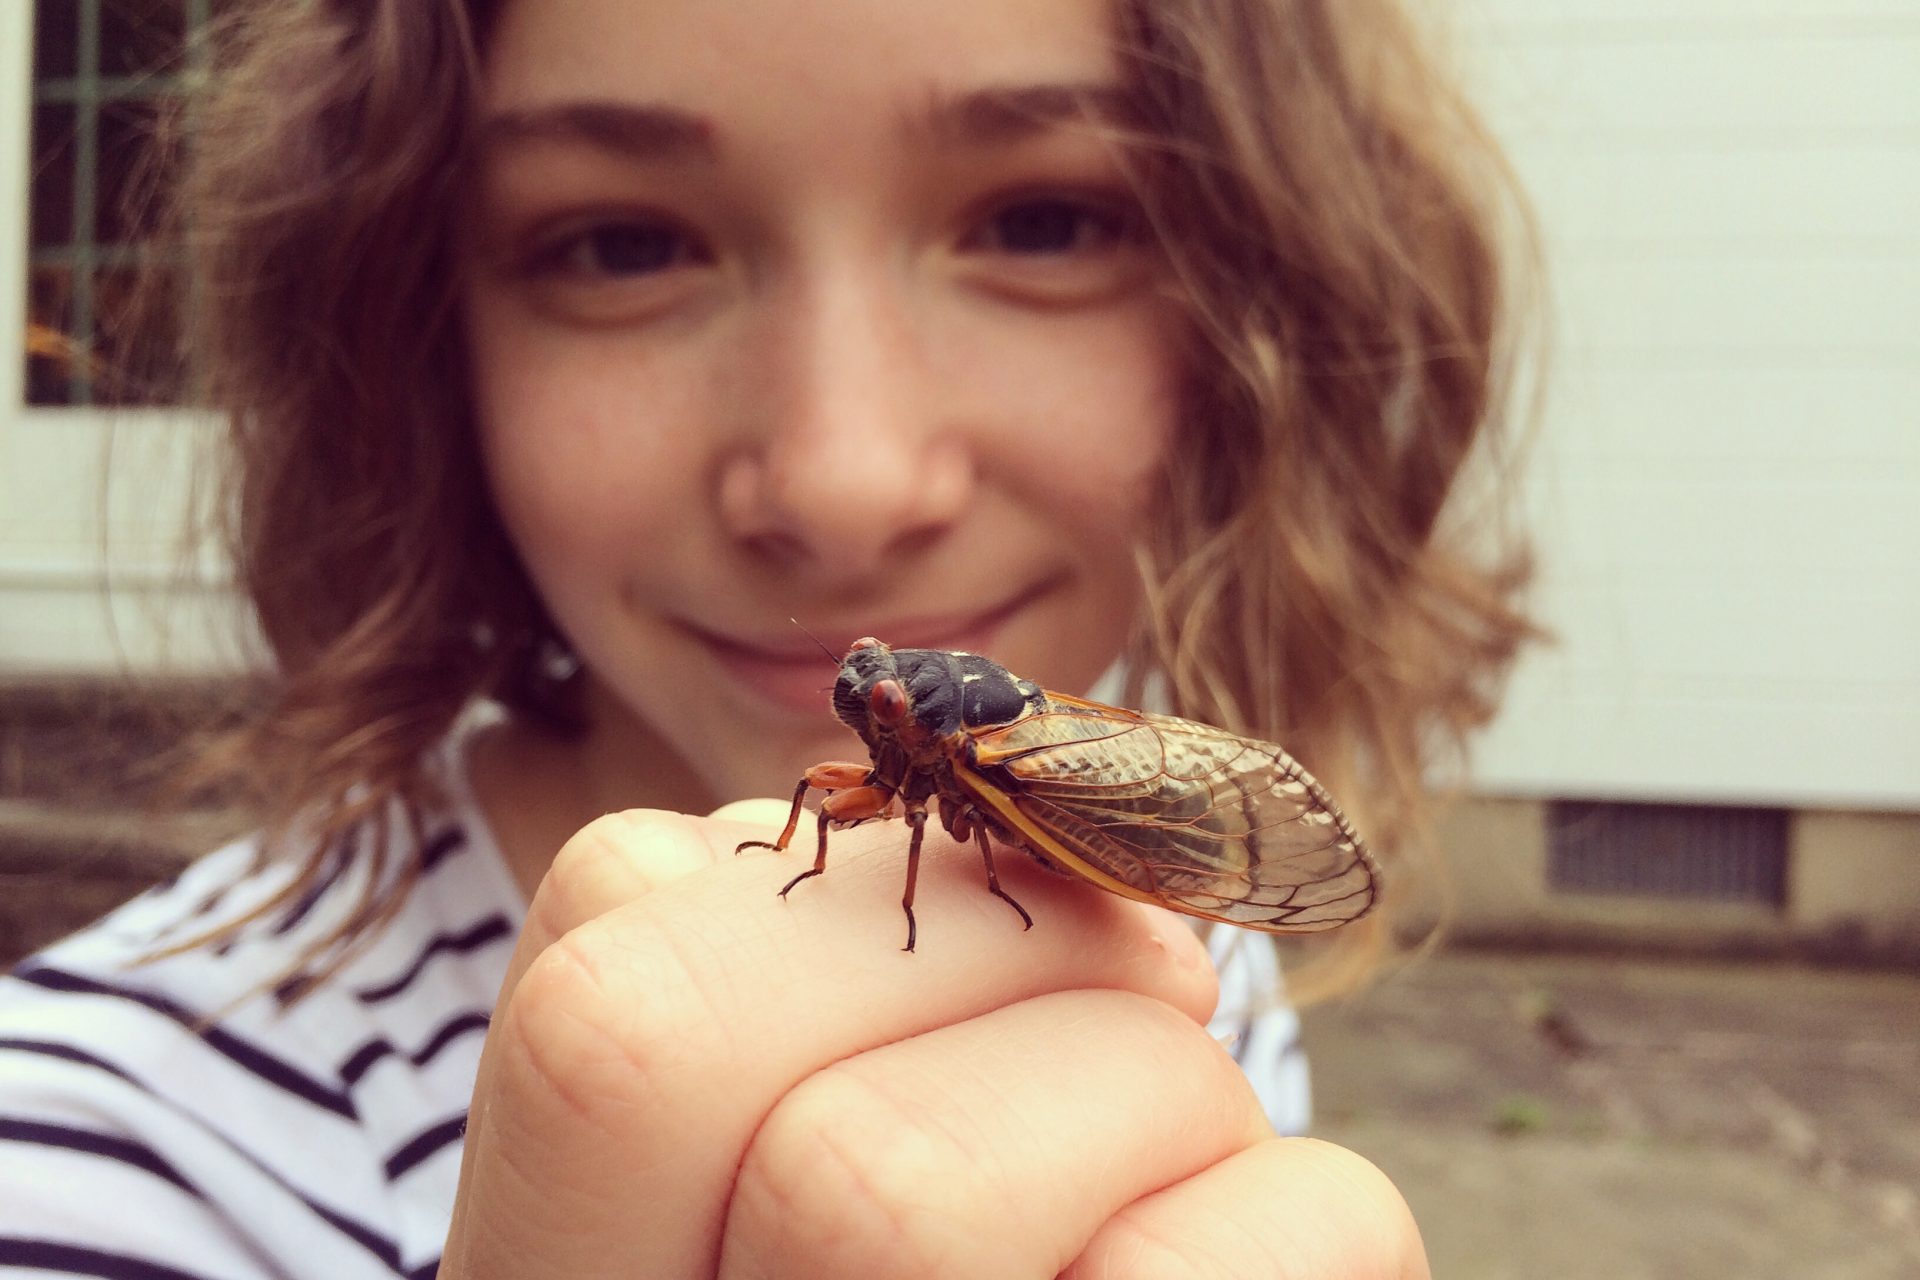 Cicadas aren't dangerous